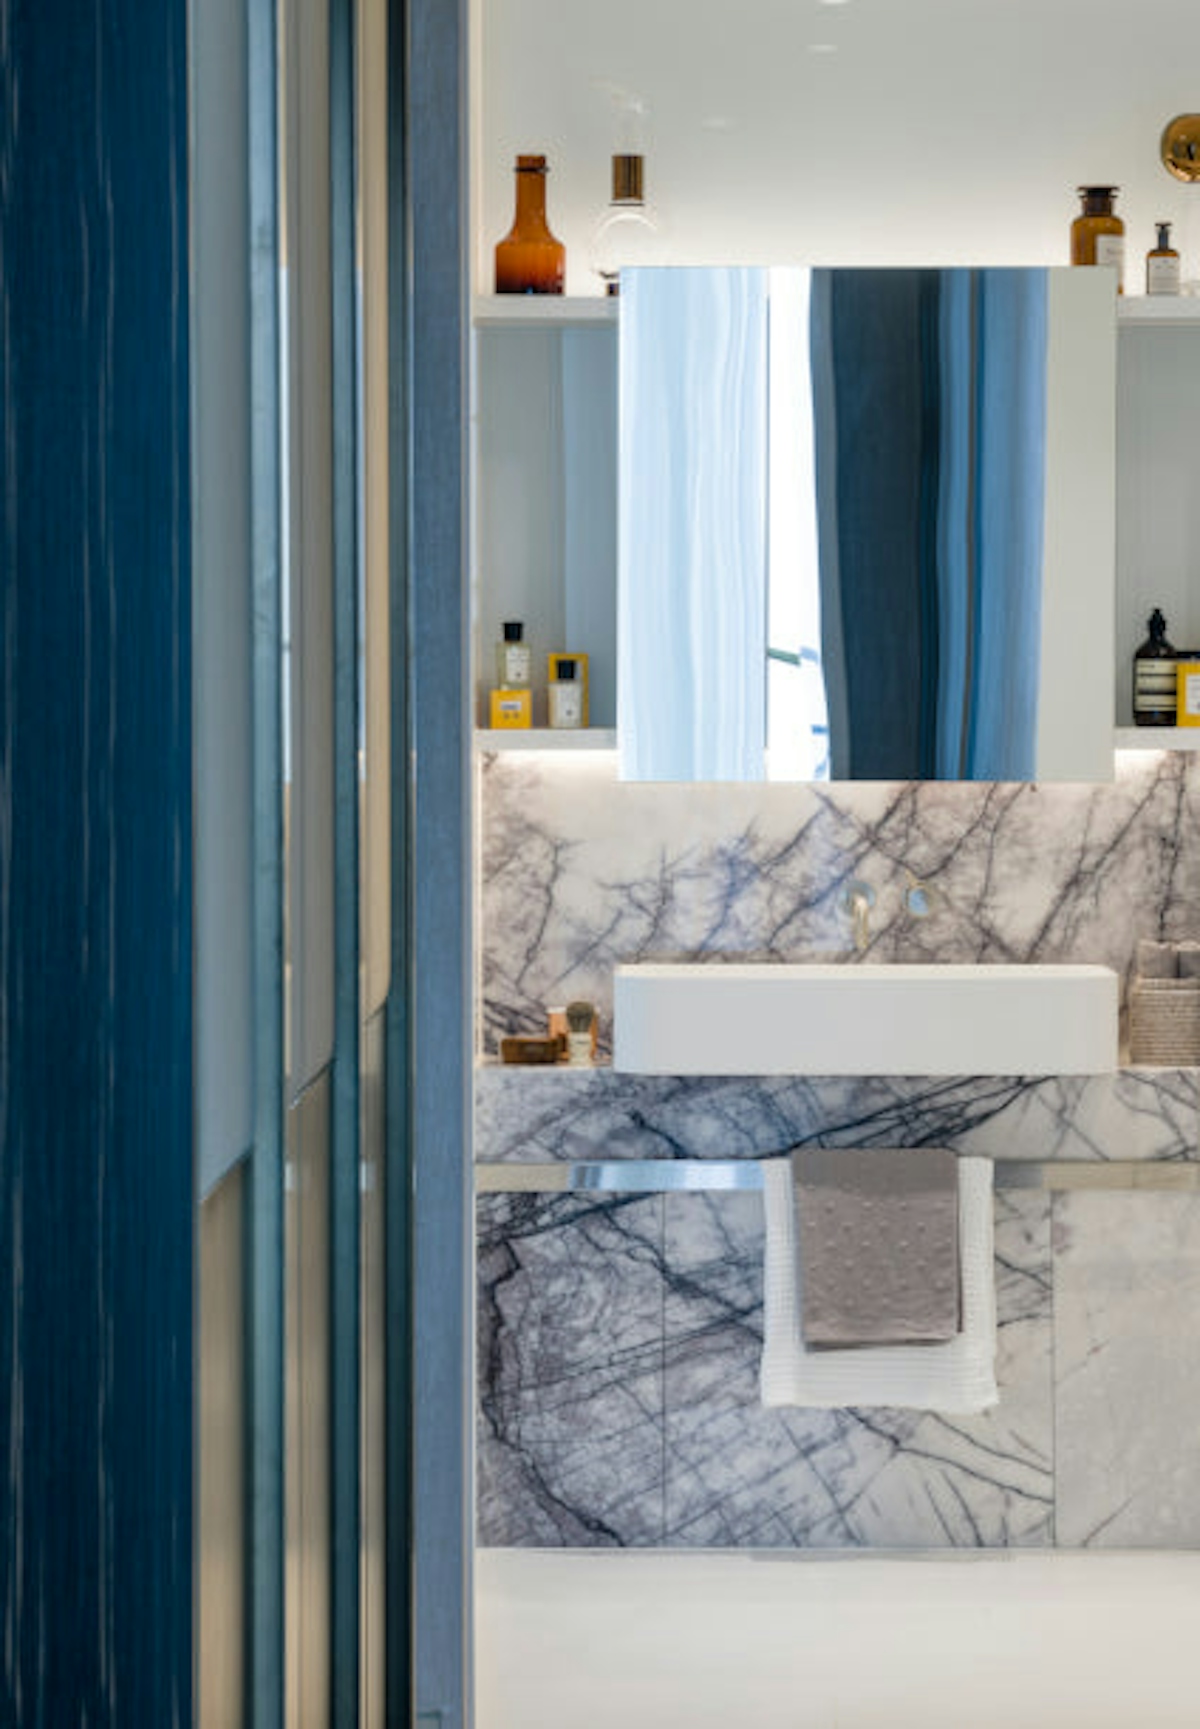 7 Guest Bathroom Styling Ideas to Impress your Guests | Designer - Goddard Littlefair, Photographer - Gareth Gardner | LuxDeco.com Style Guide